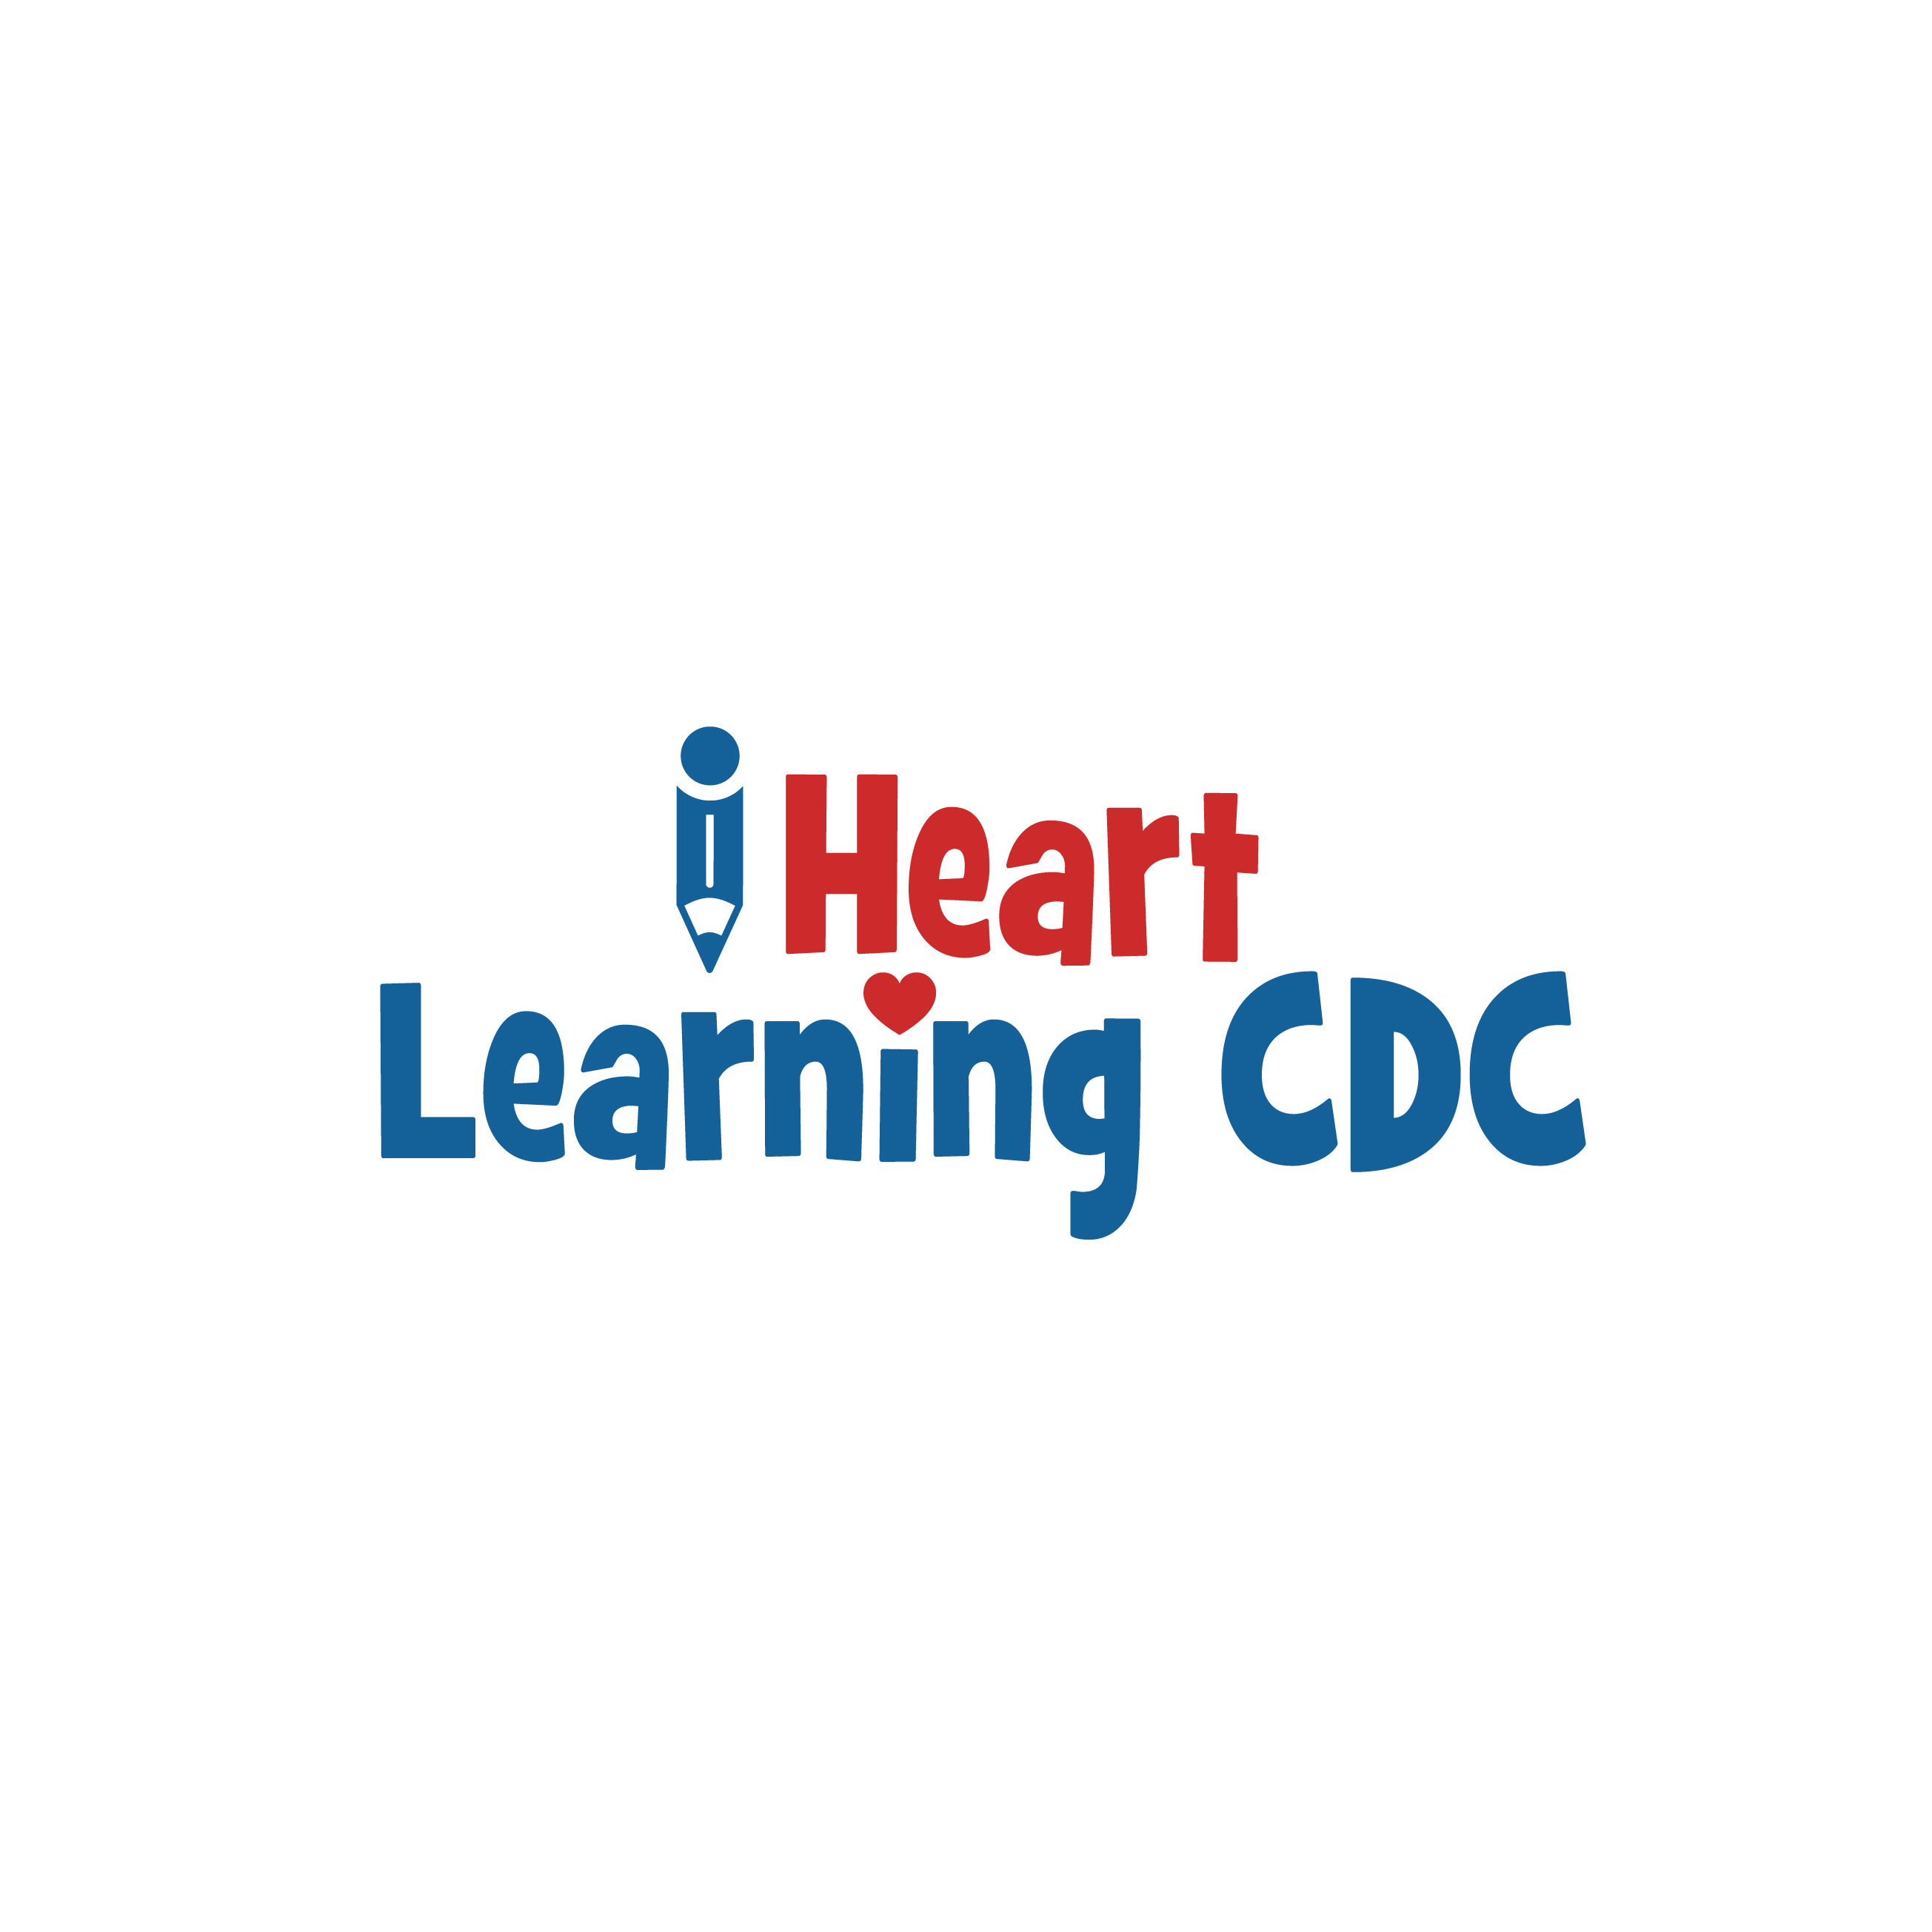 I Heart Learning Cdc